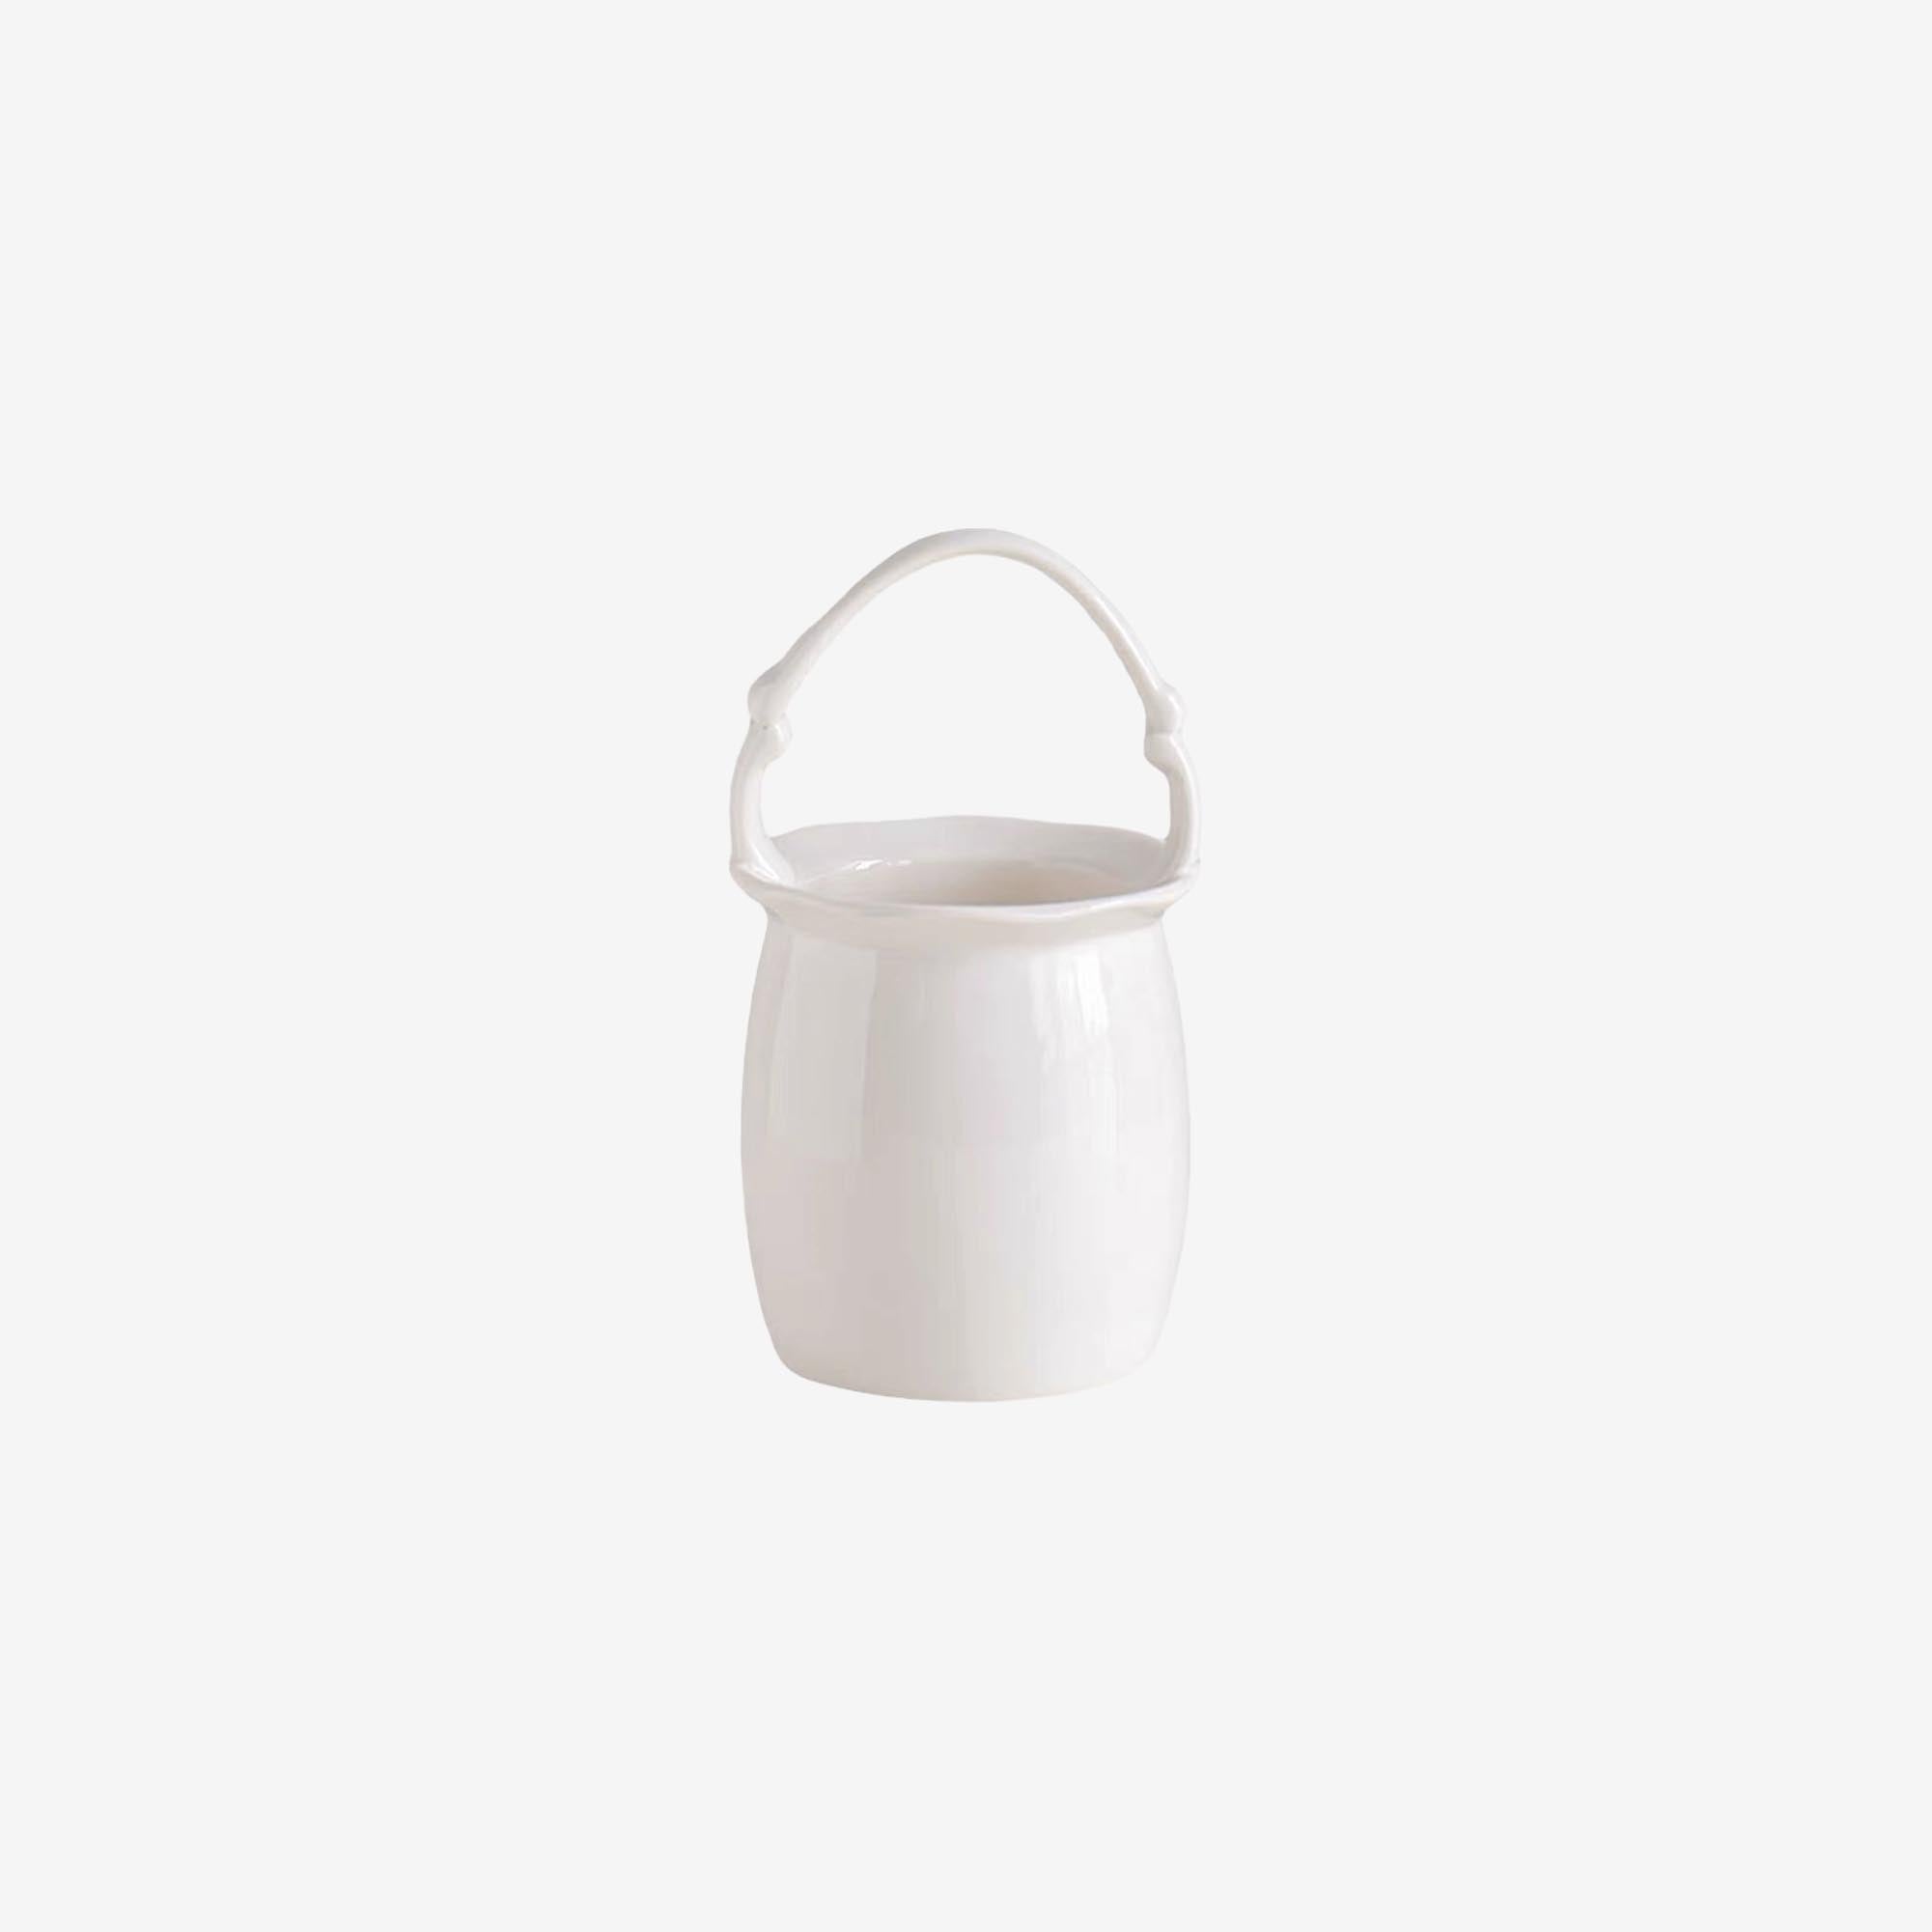 White Ceramic Basket